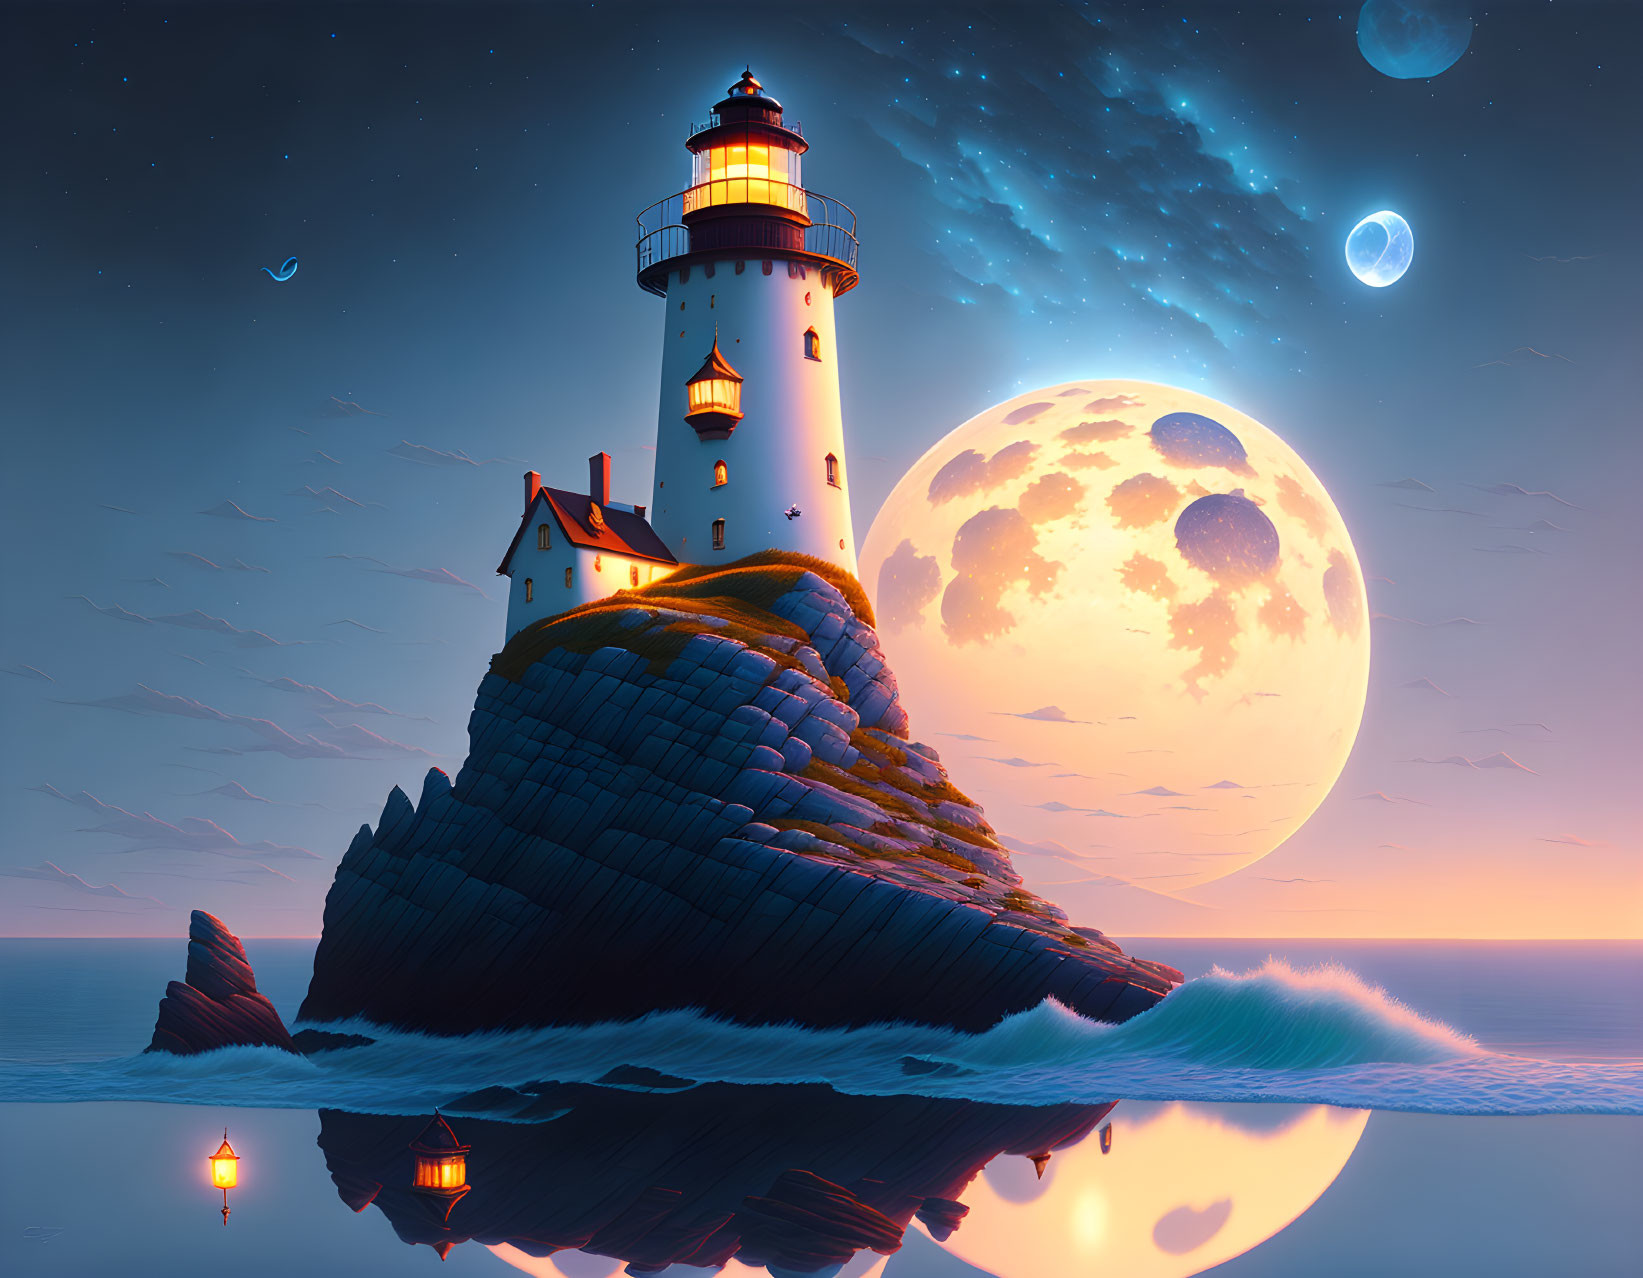 Tranquil night scene: lighthouse on rocky island, starry sky, moon, planets,